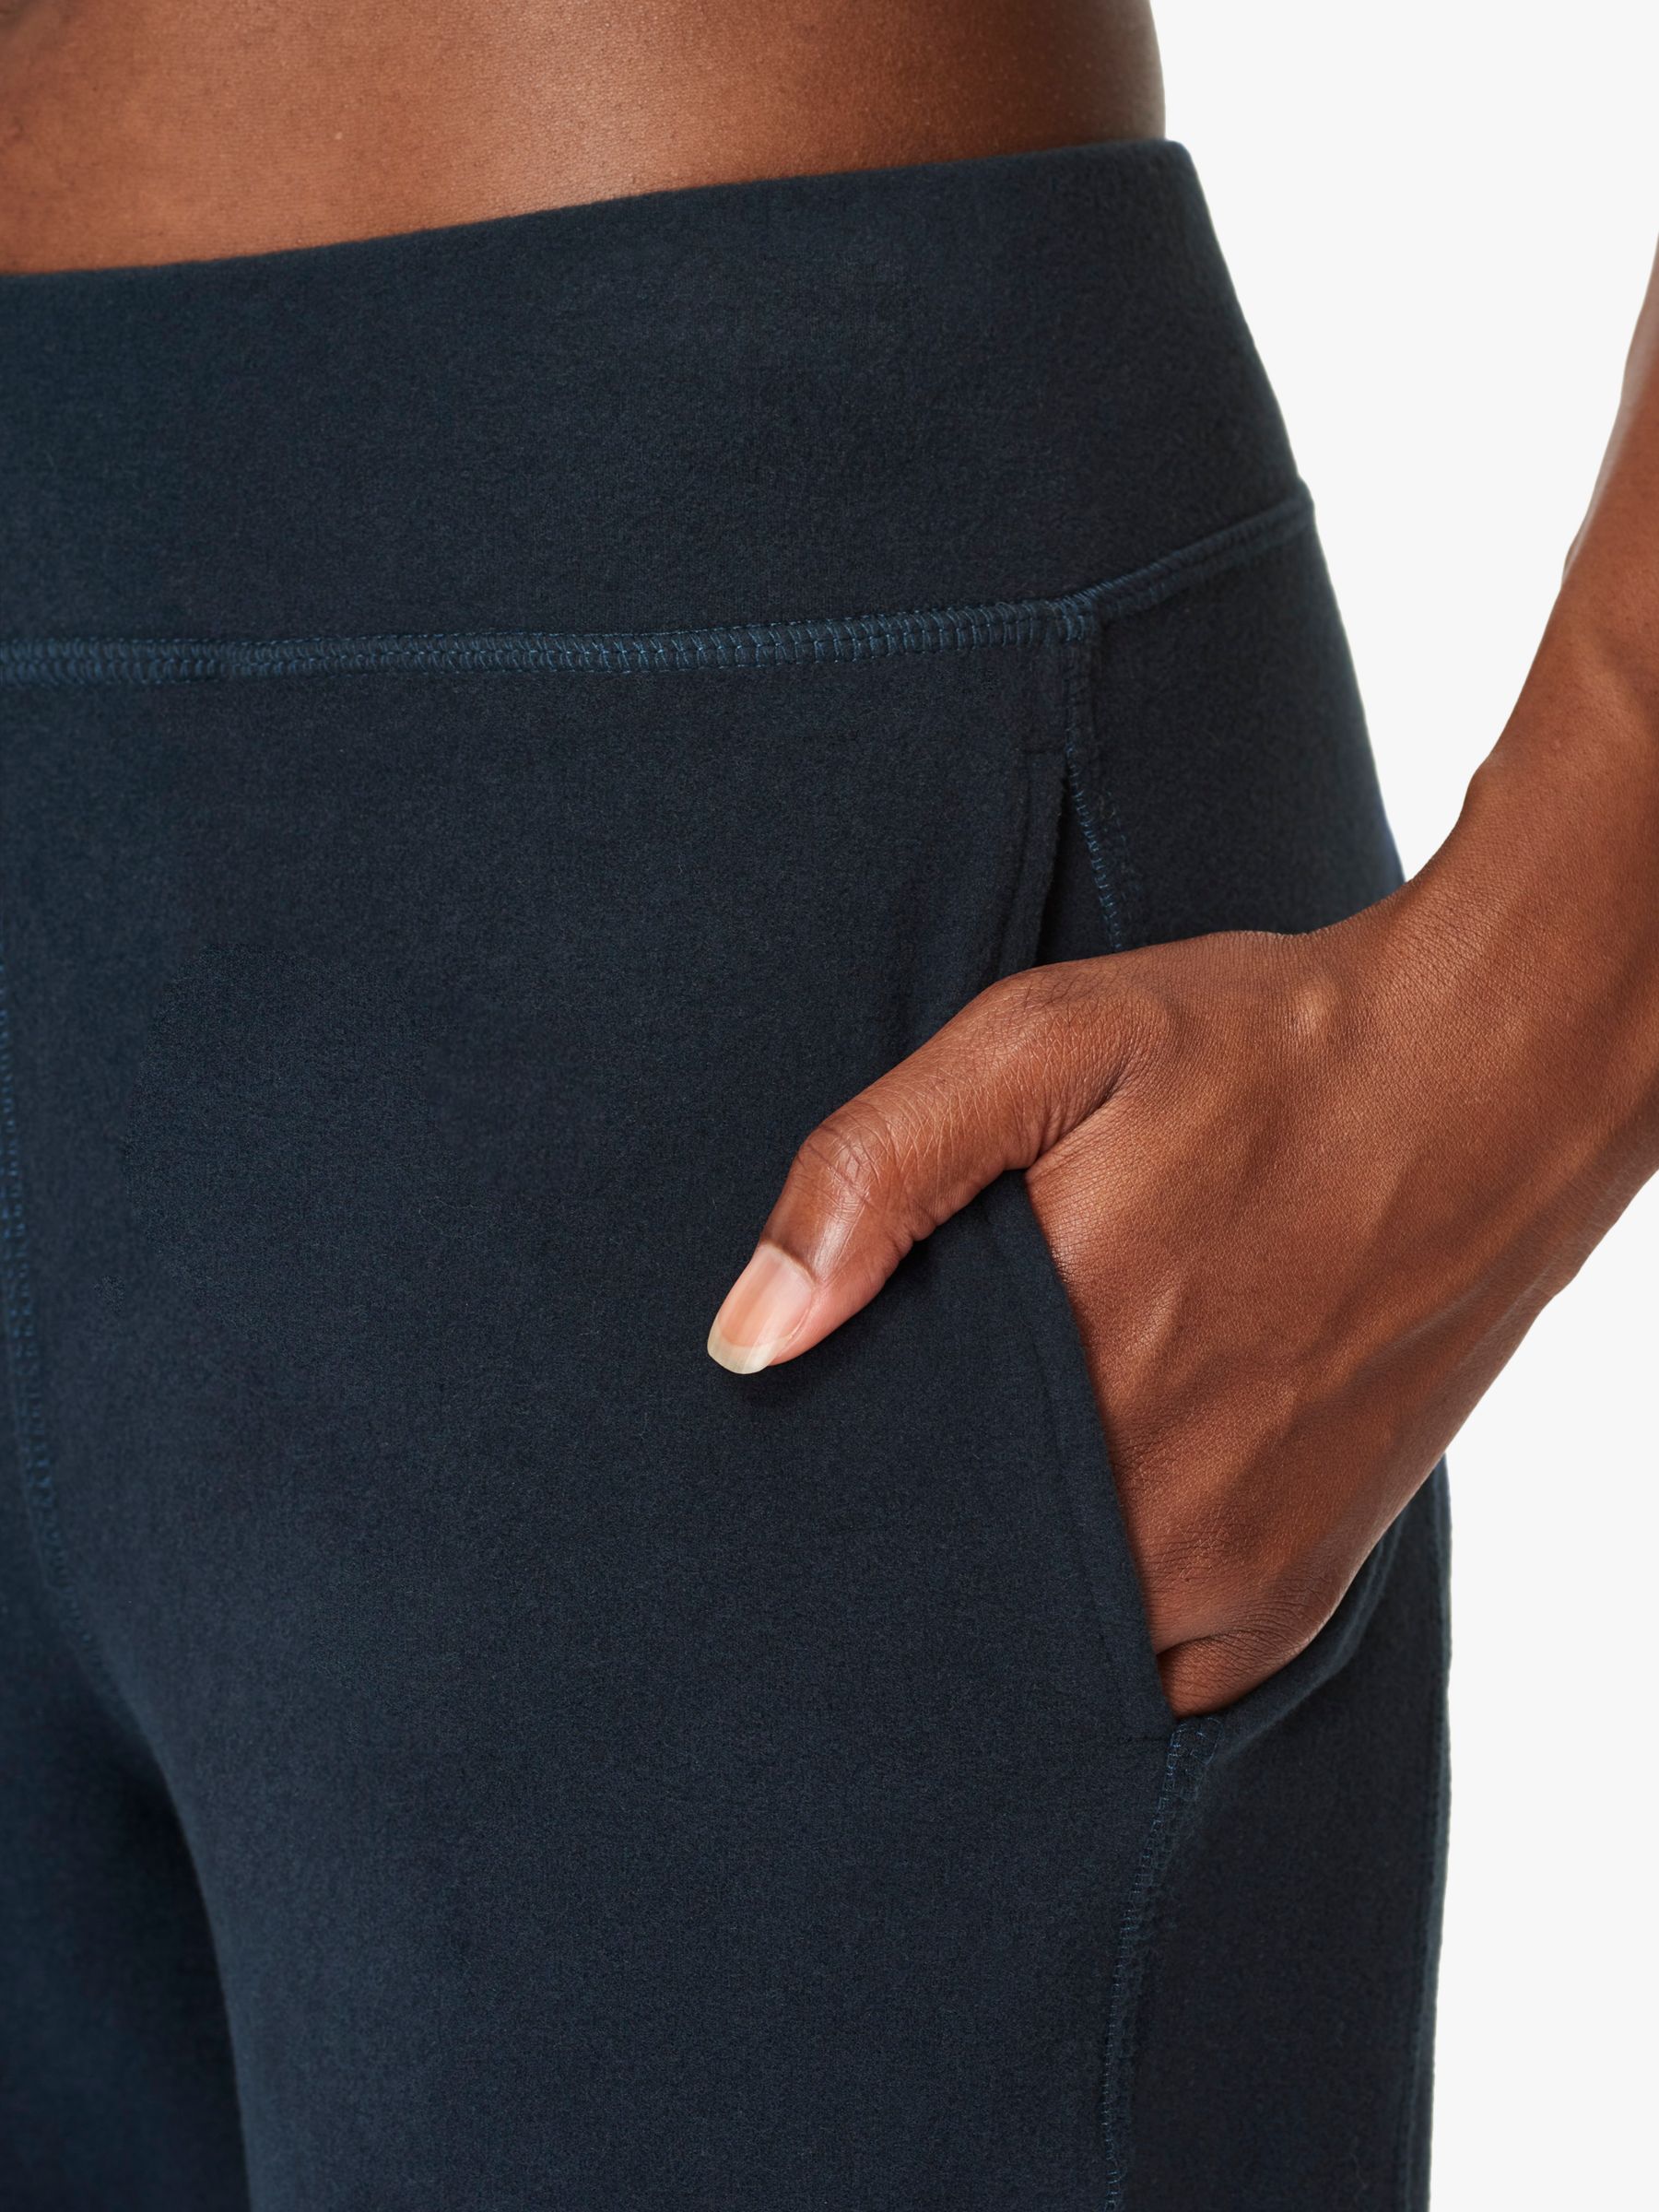 Sweaty Betty Gary Luxe Fleece Yoga Pants, Vapour Blue- Size M RRP £90